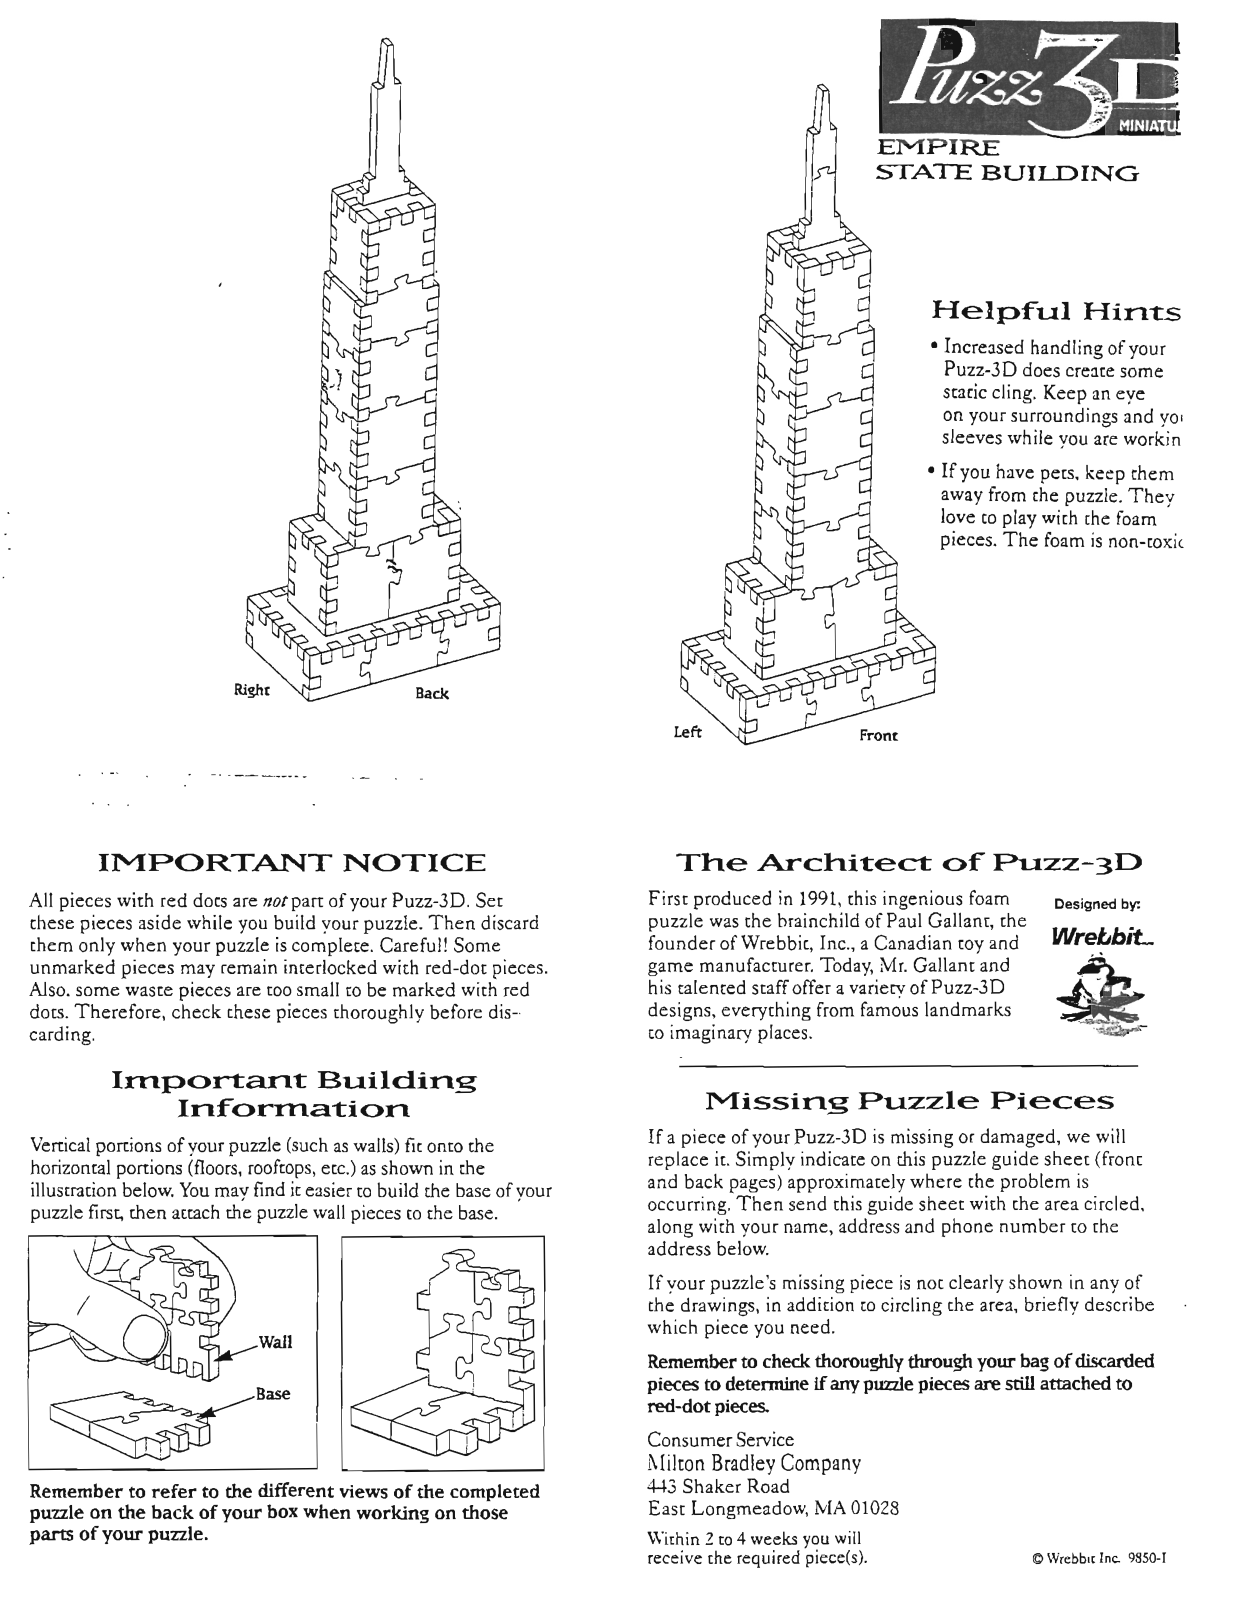 Hasbro PUZZ 3D MINIATURES EMPIRE STATE BUILDING Manual